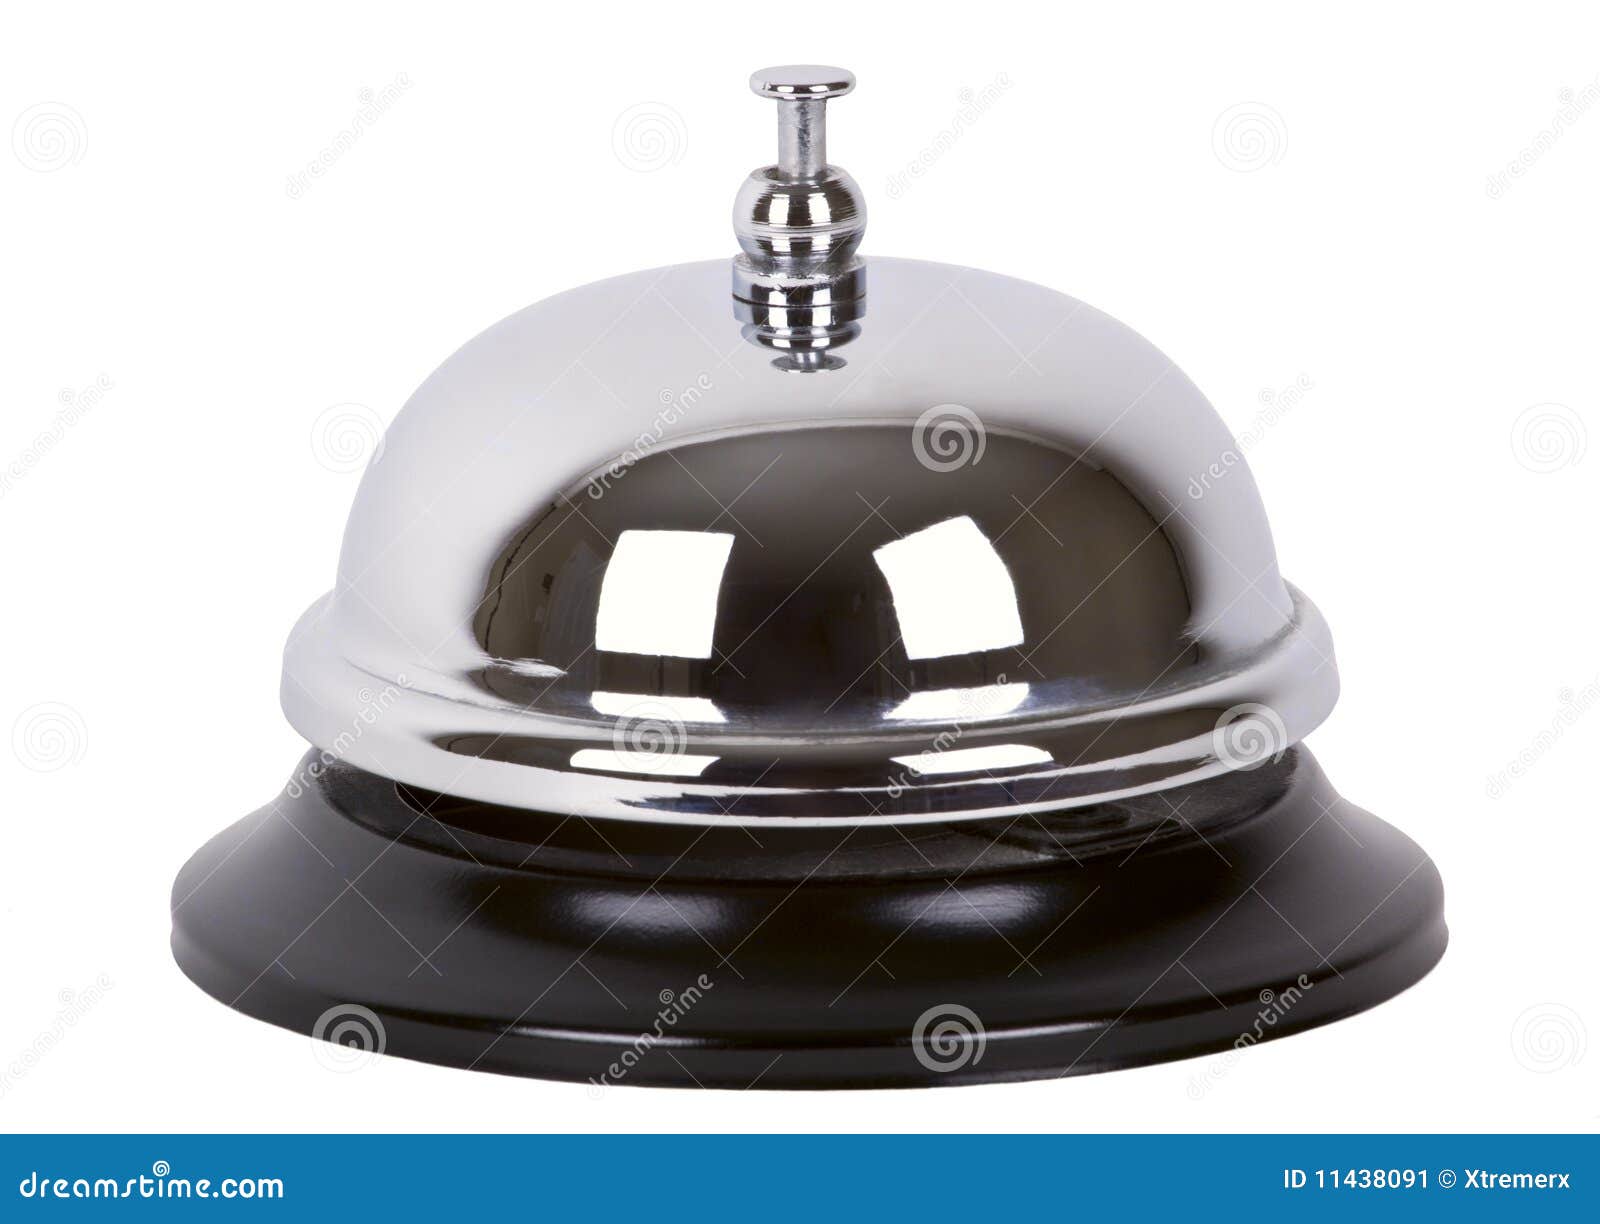 ring service bell alarm .